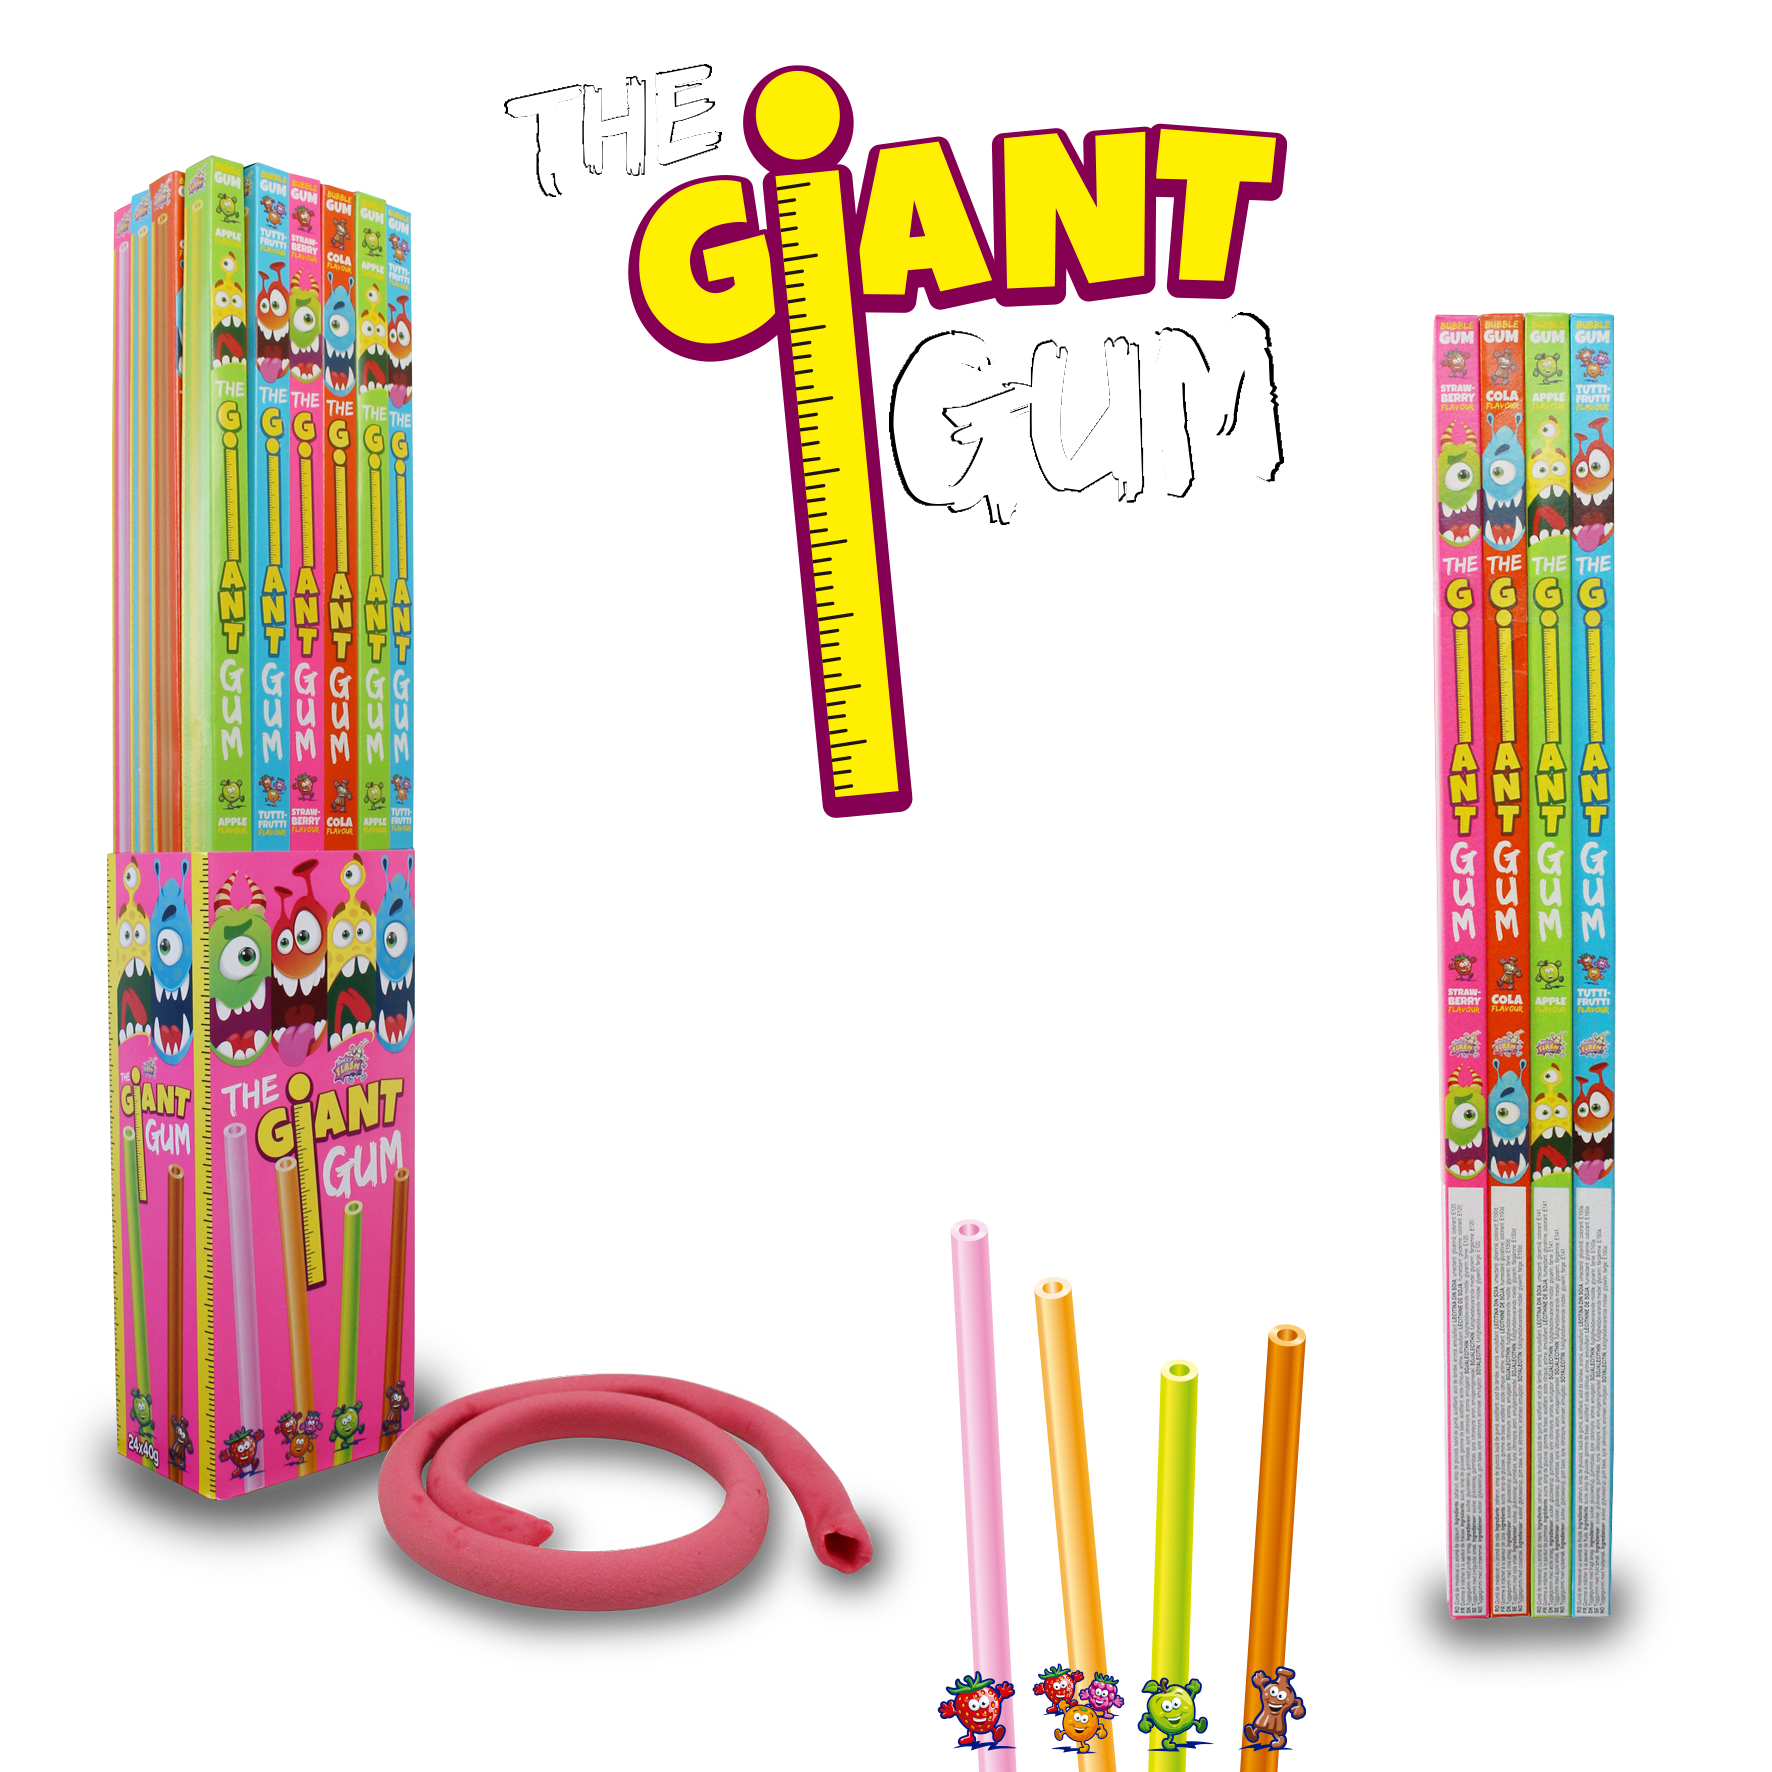 The Giant Gum